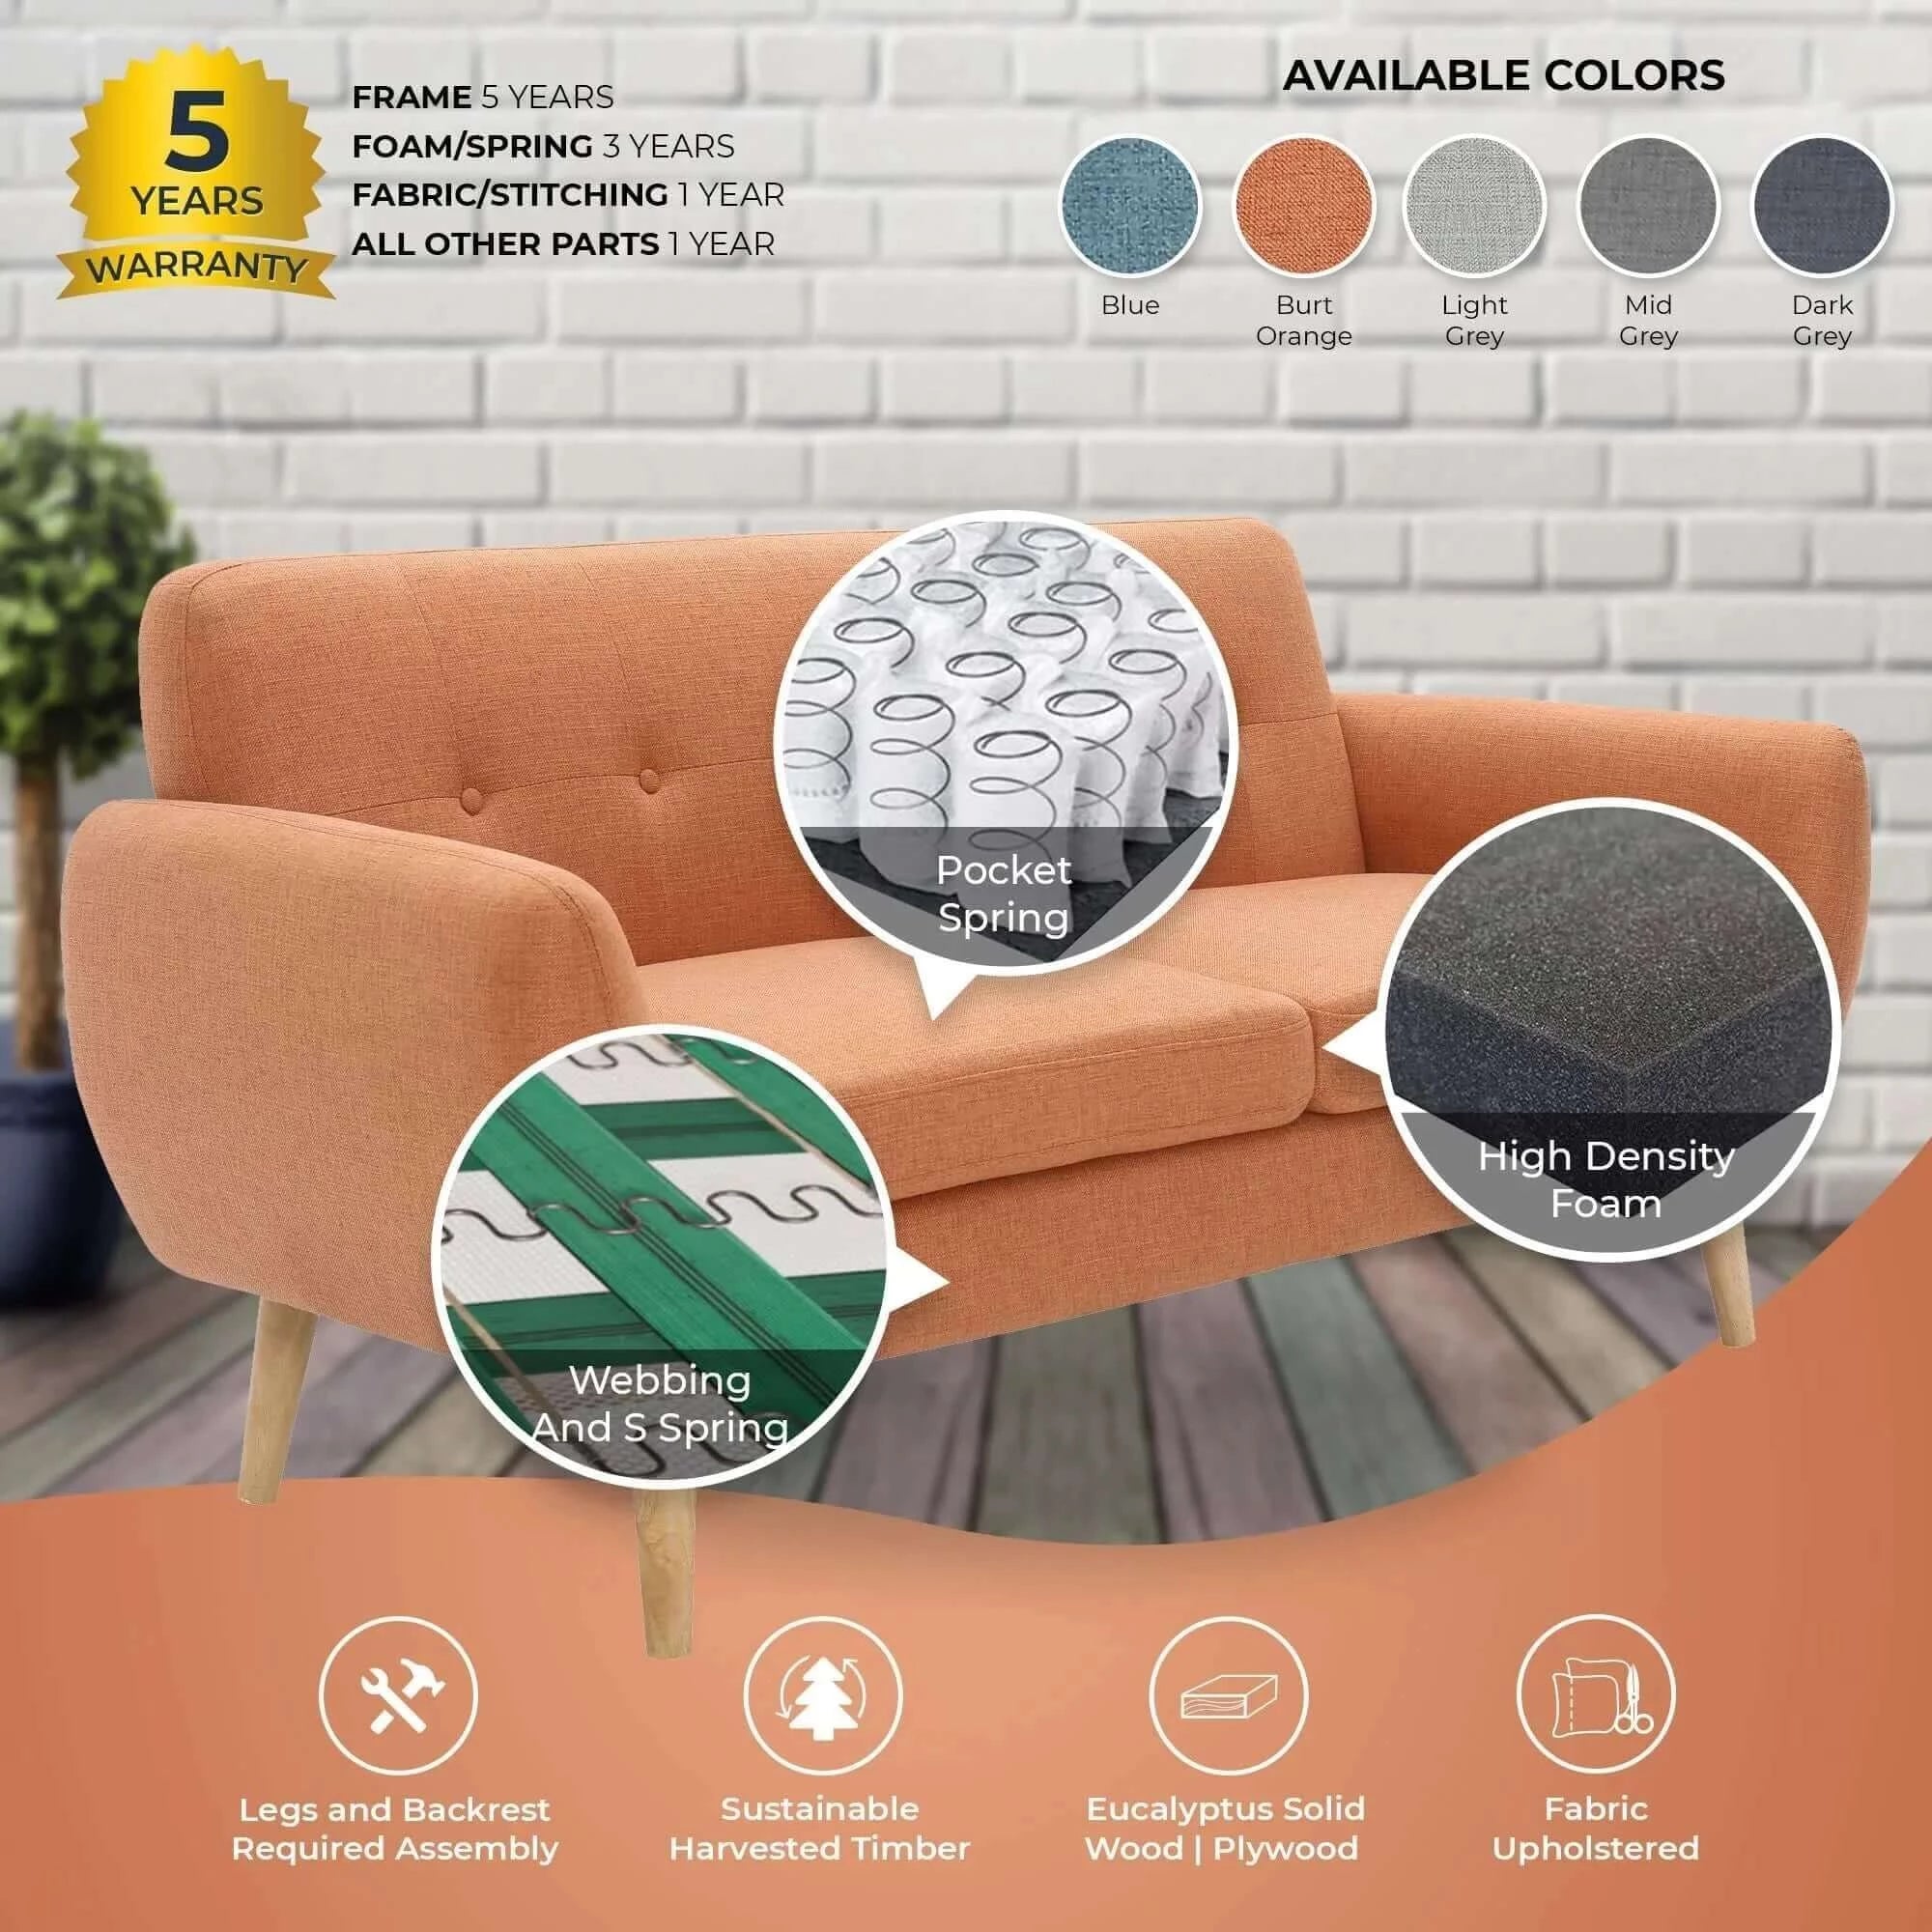 Buy dane 3 + 1 seater fabric upholstered sofa armchair lounge couch - orange - upinteriors-Upinteriors